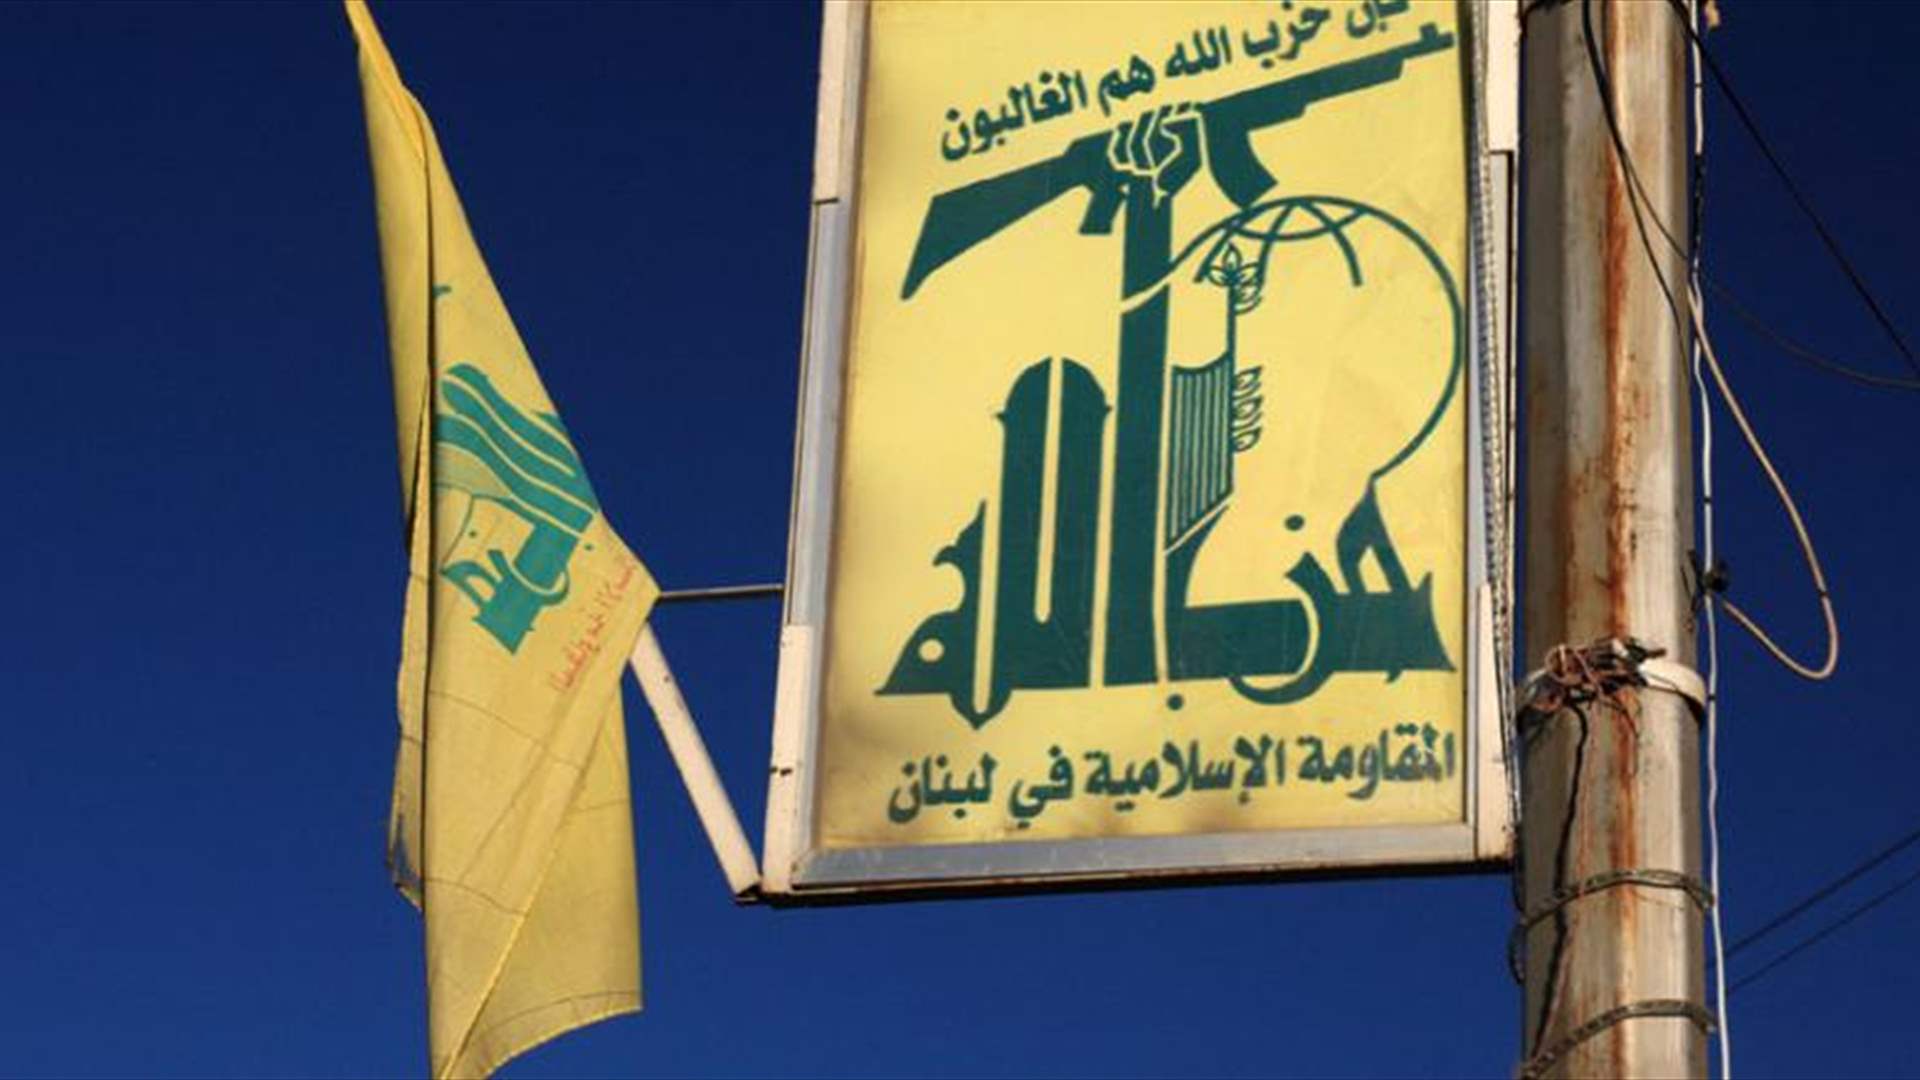 Hezbollah strikes Israeli soldiers in Manara settlement, claiming all killed